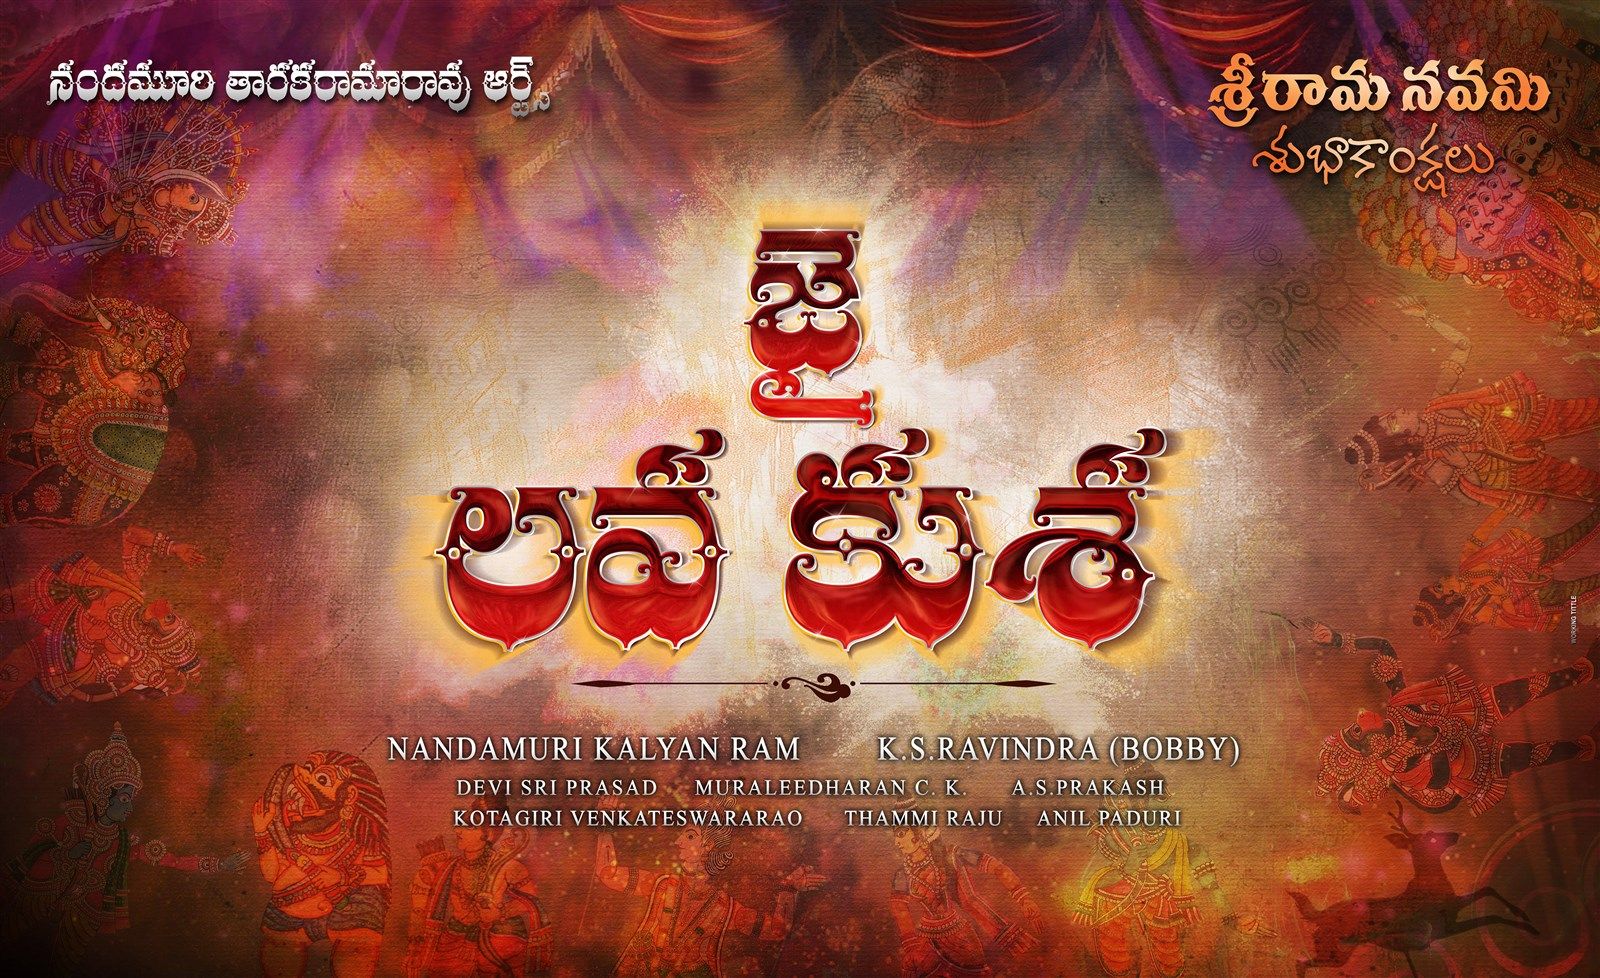 Jr NTR's Jai Lava Kusa Movie Sriramanavami Wishes Wallpaper. New